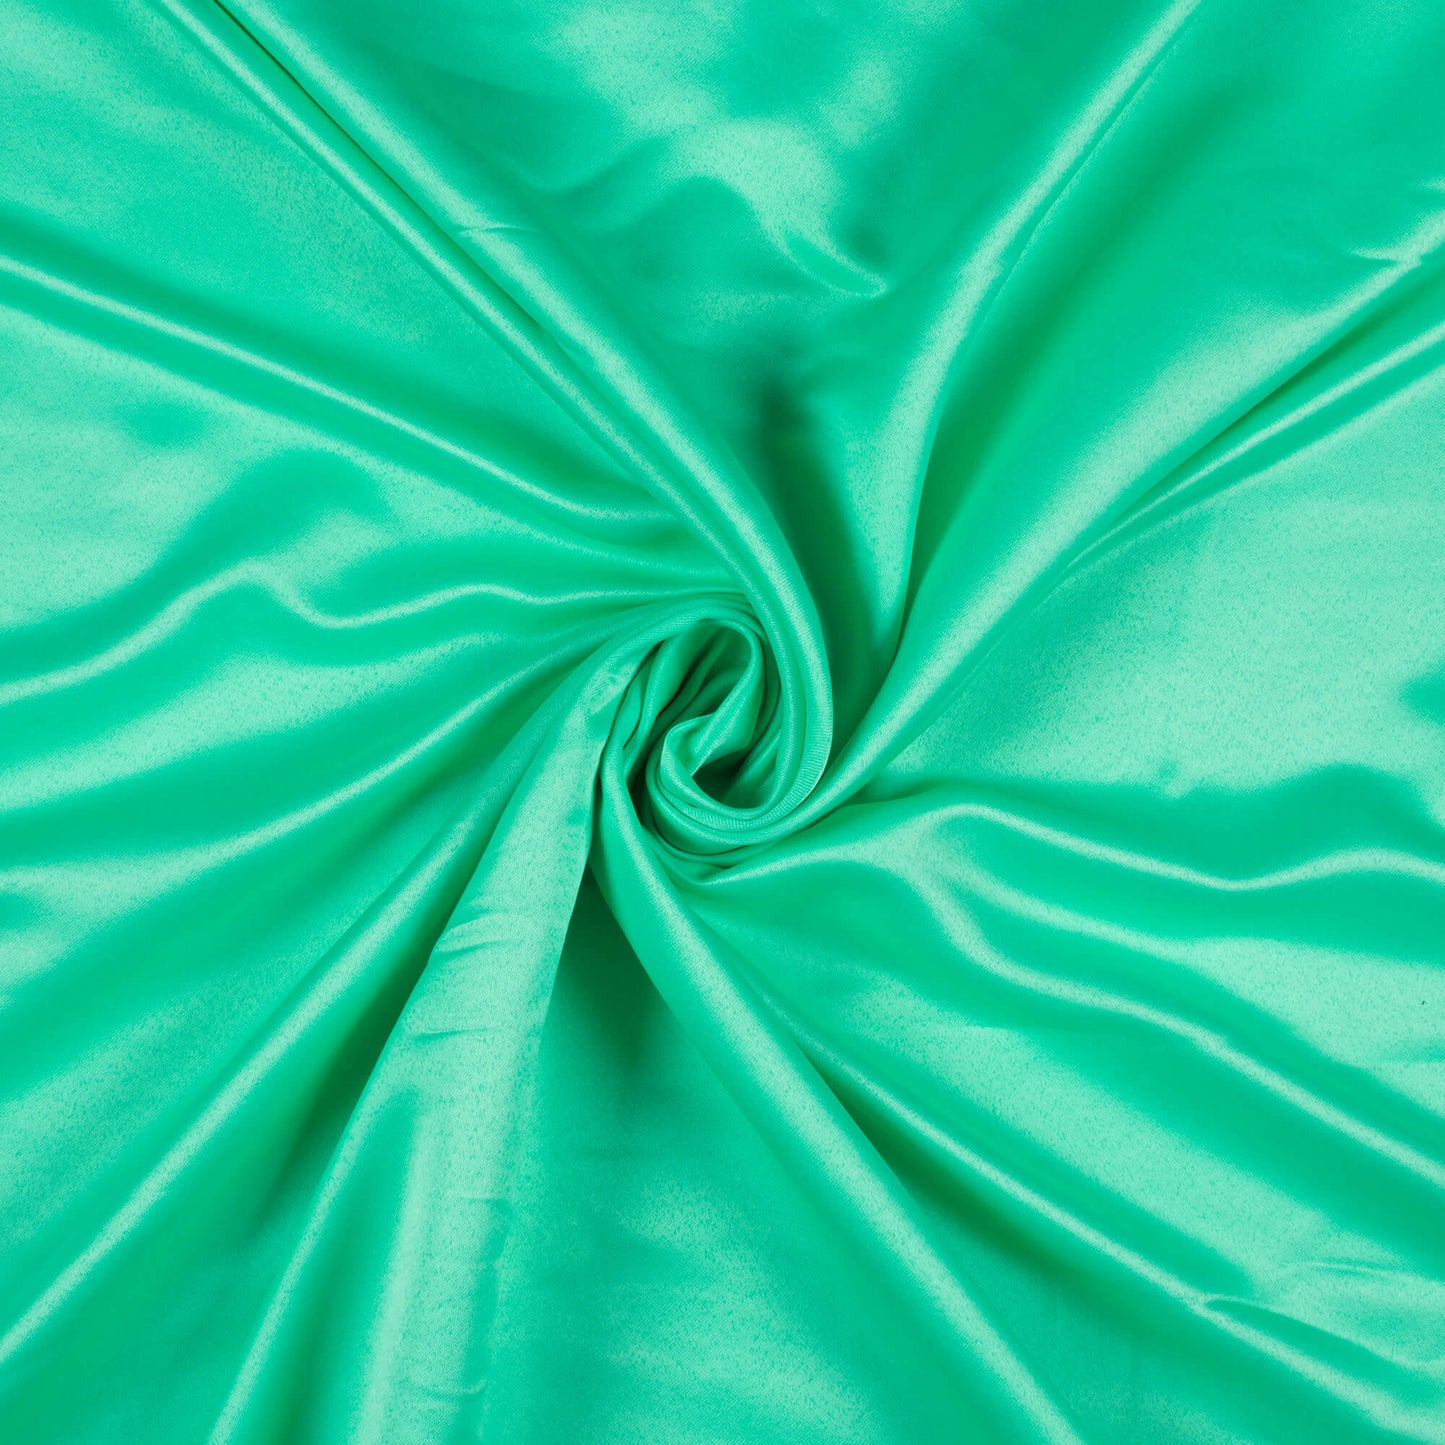 Seafoam Green Plain Taffeta Satin Fabric (Width 58 Inches)